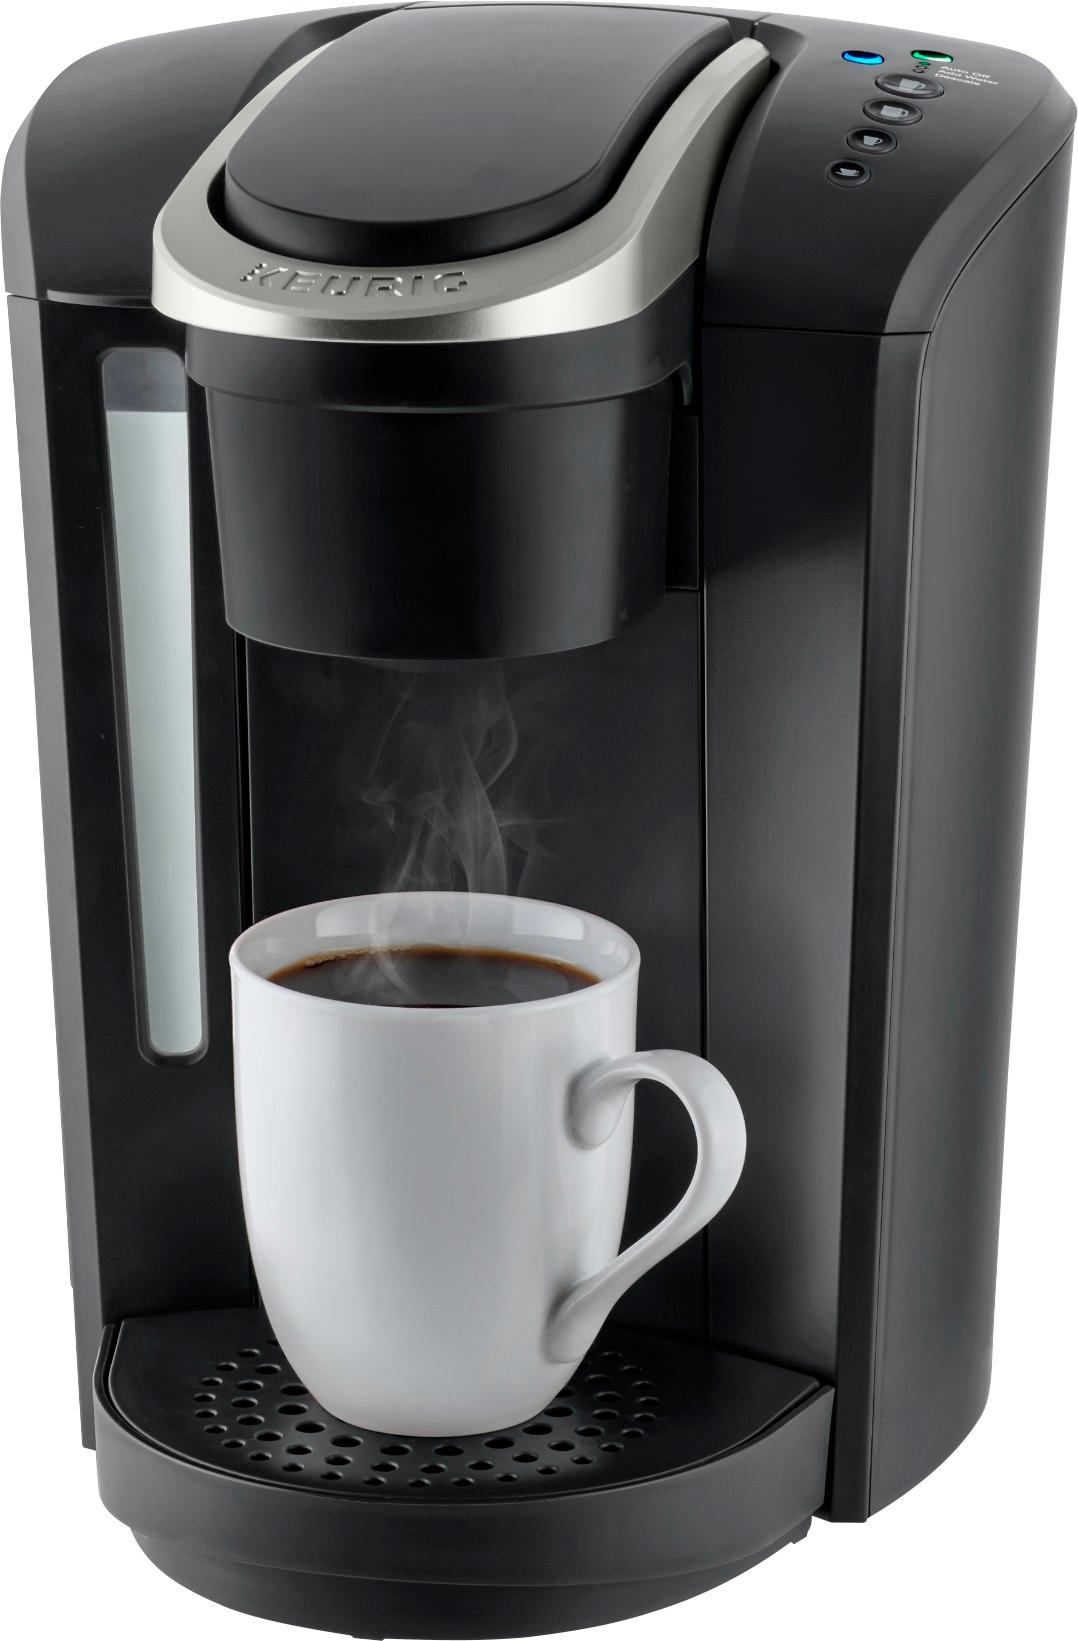 Keurig K-Select Single Serve Black Coffee Maker